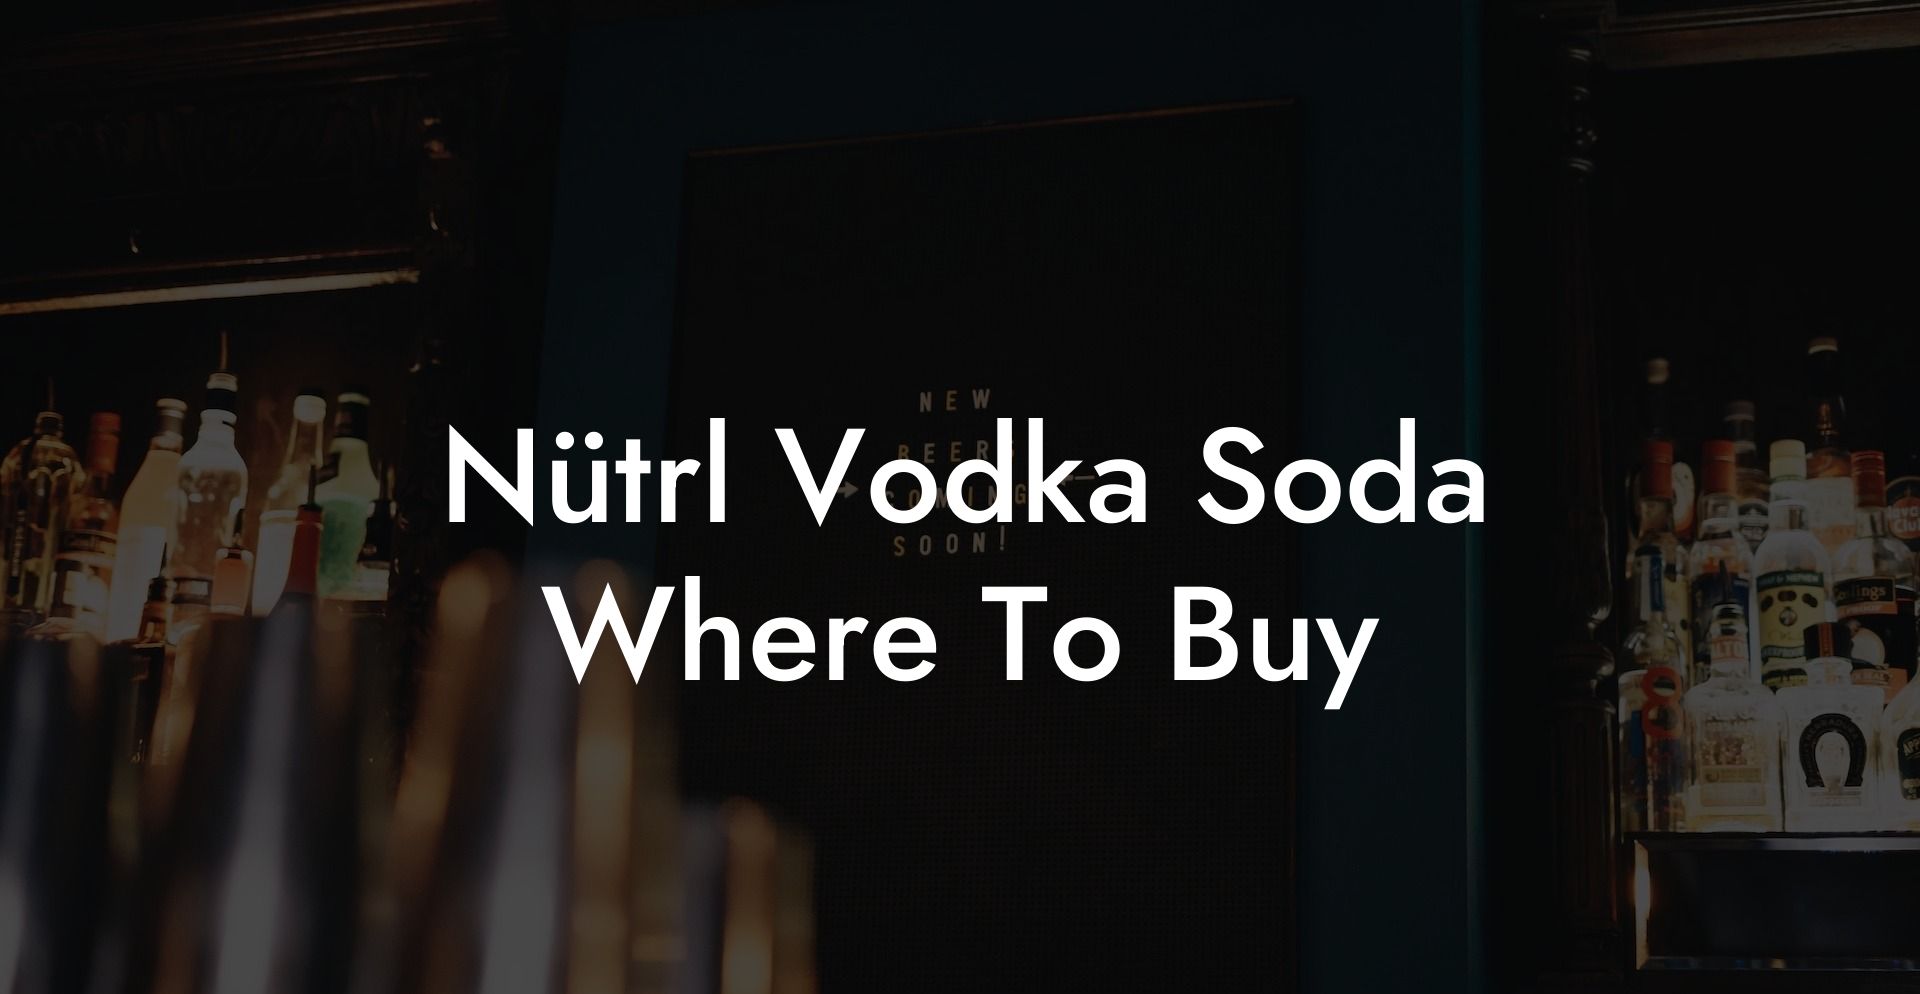 Nütrl Vodka Soda Where To Buy